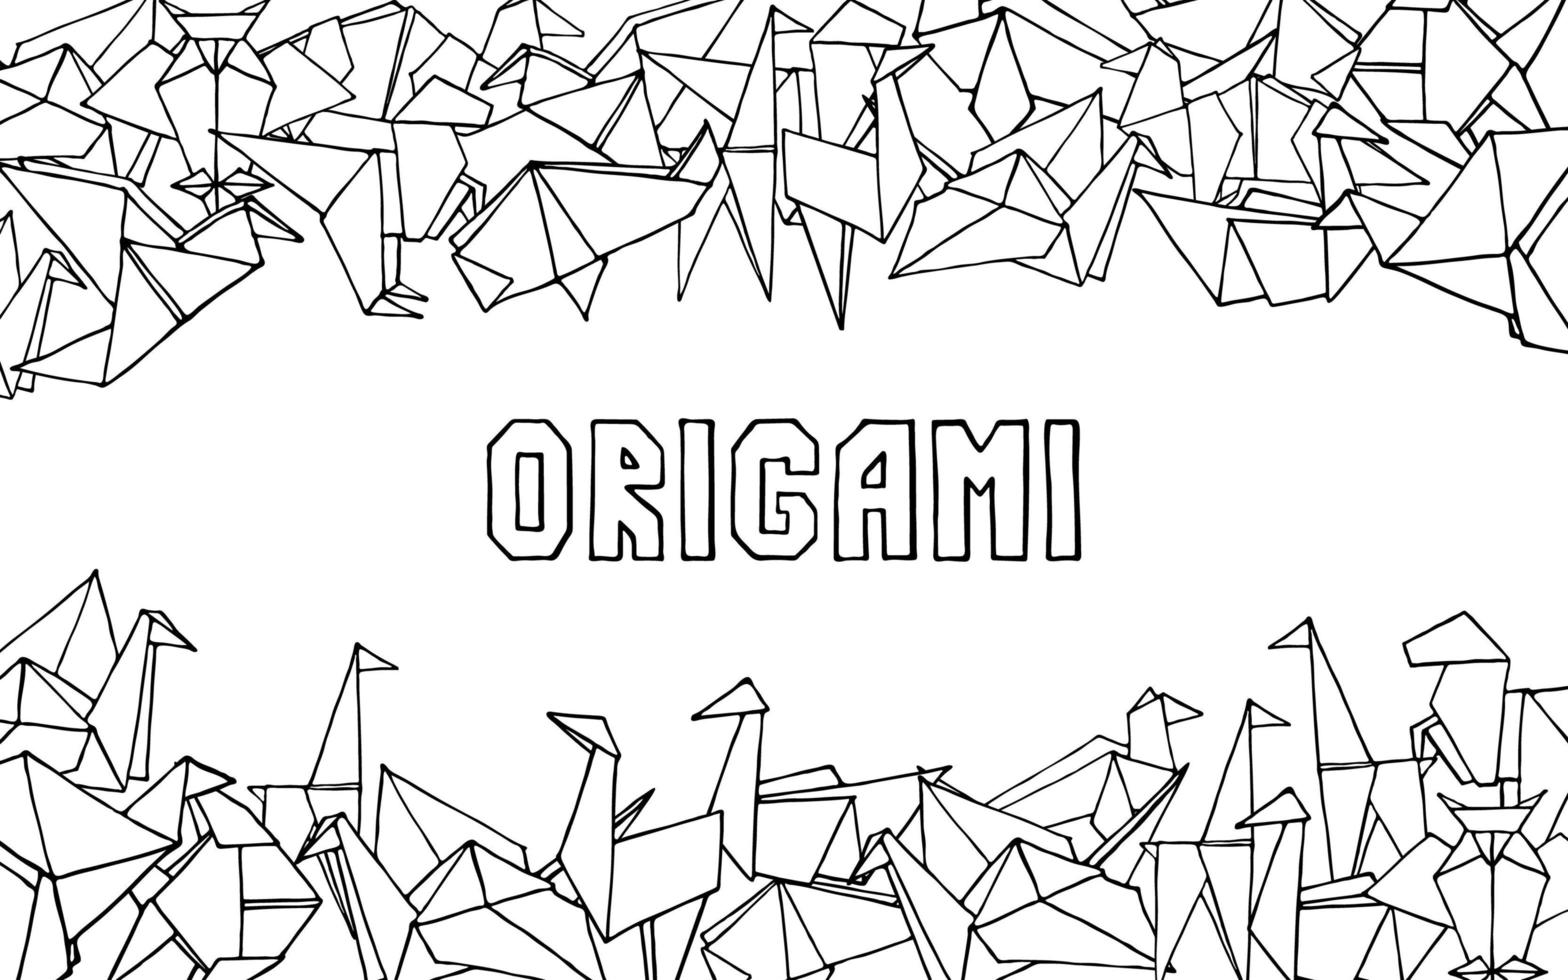 Origami animals hand drawn doodle set vector